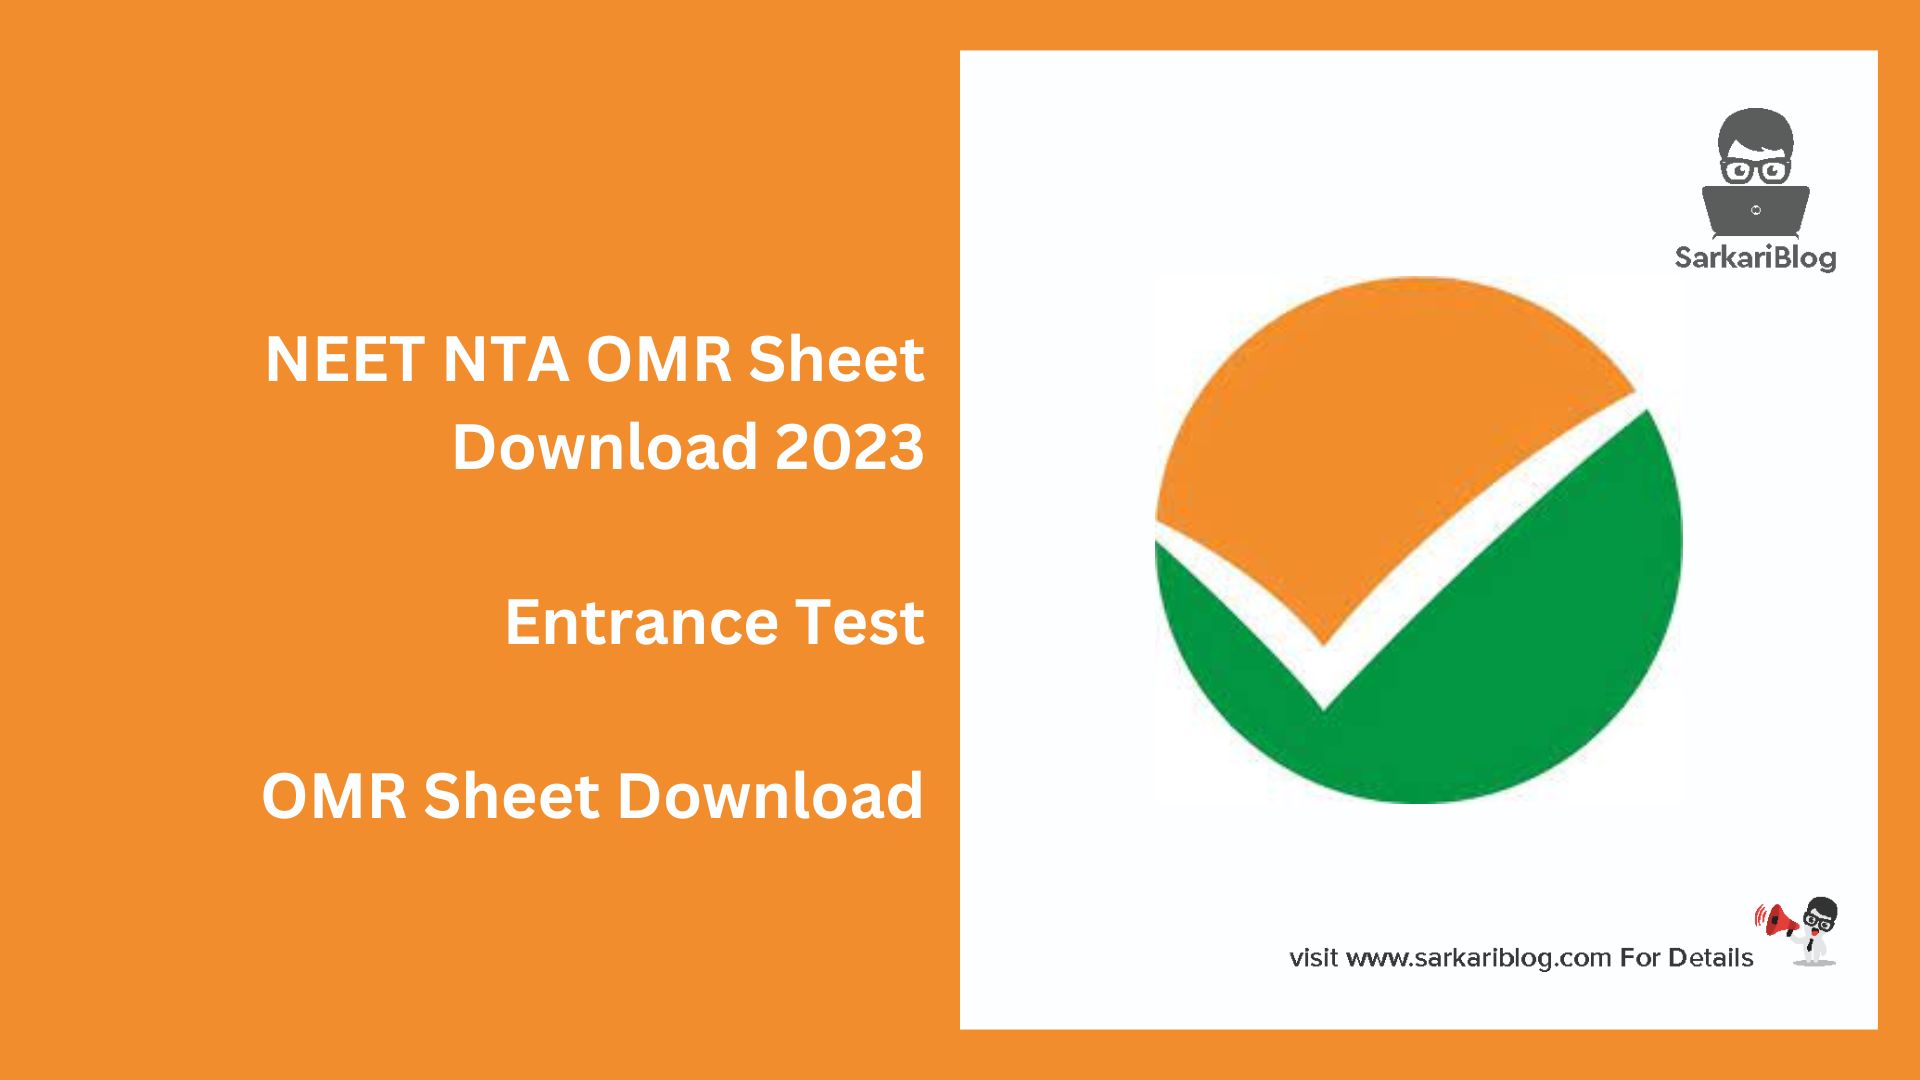 NEET NTA OMR Sheet Download 2023